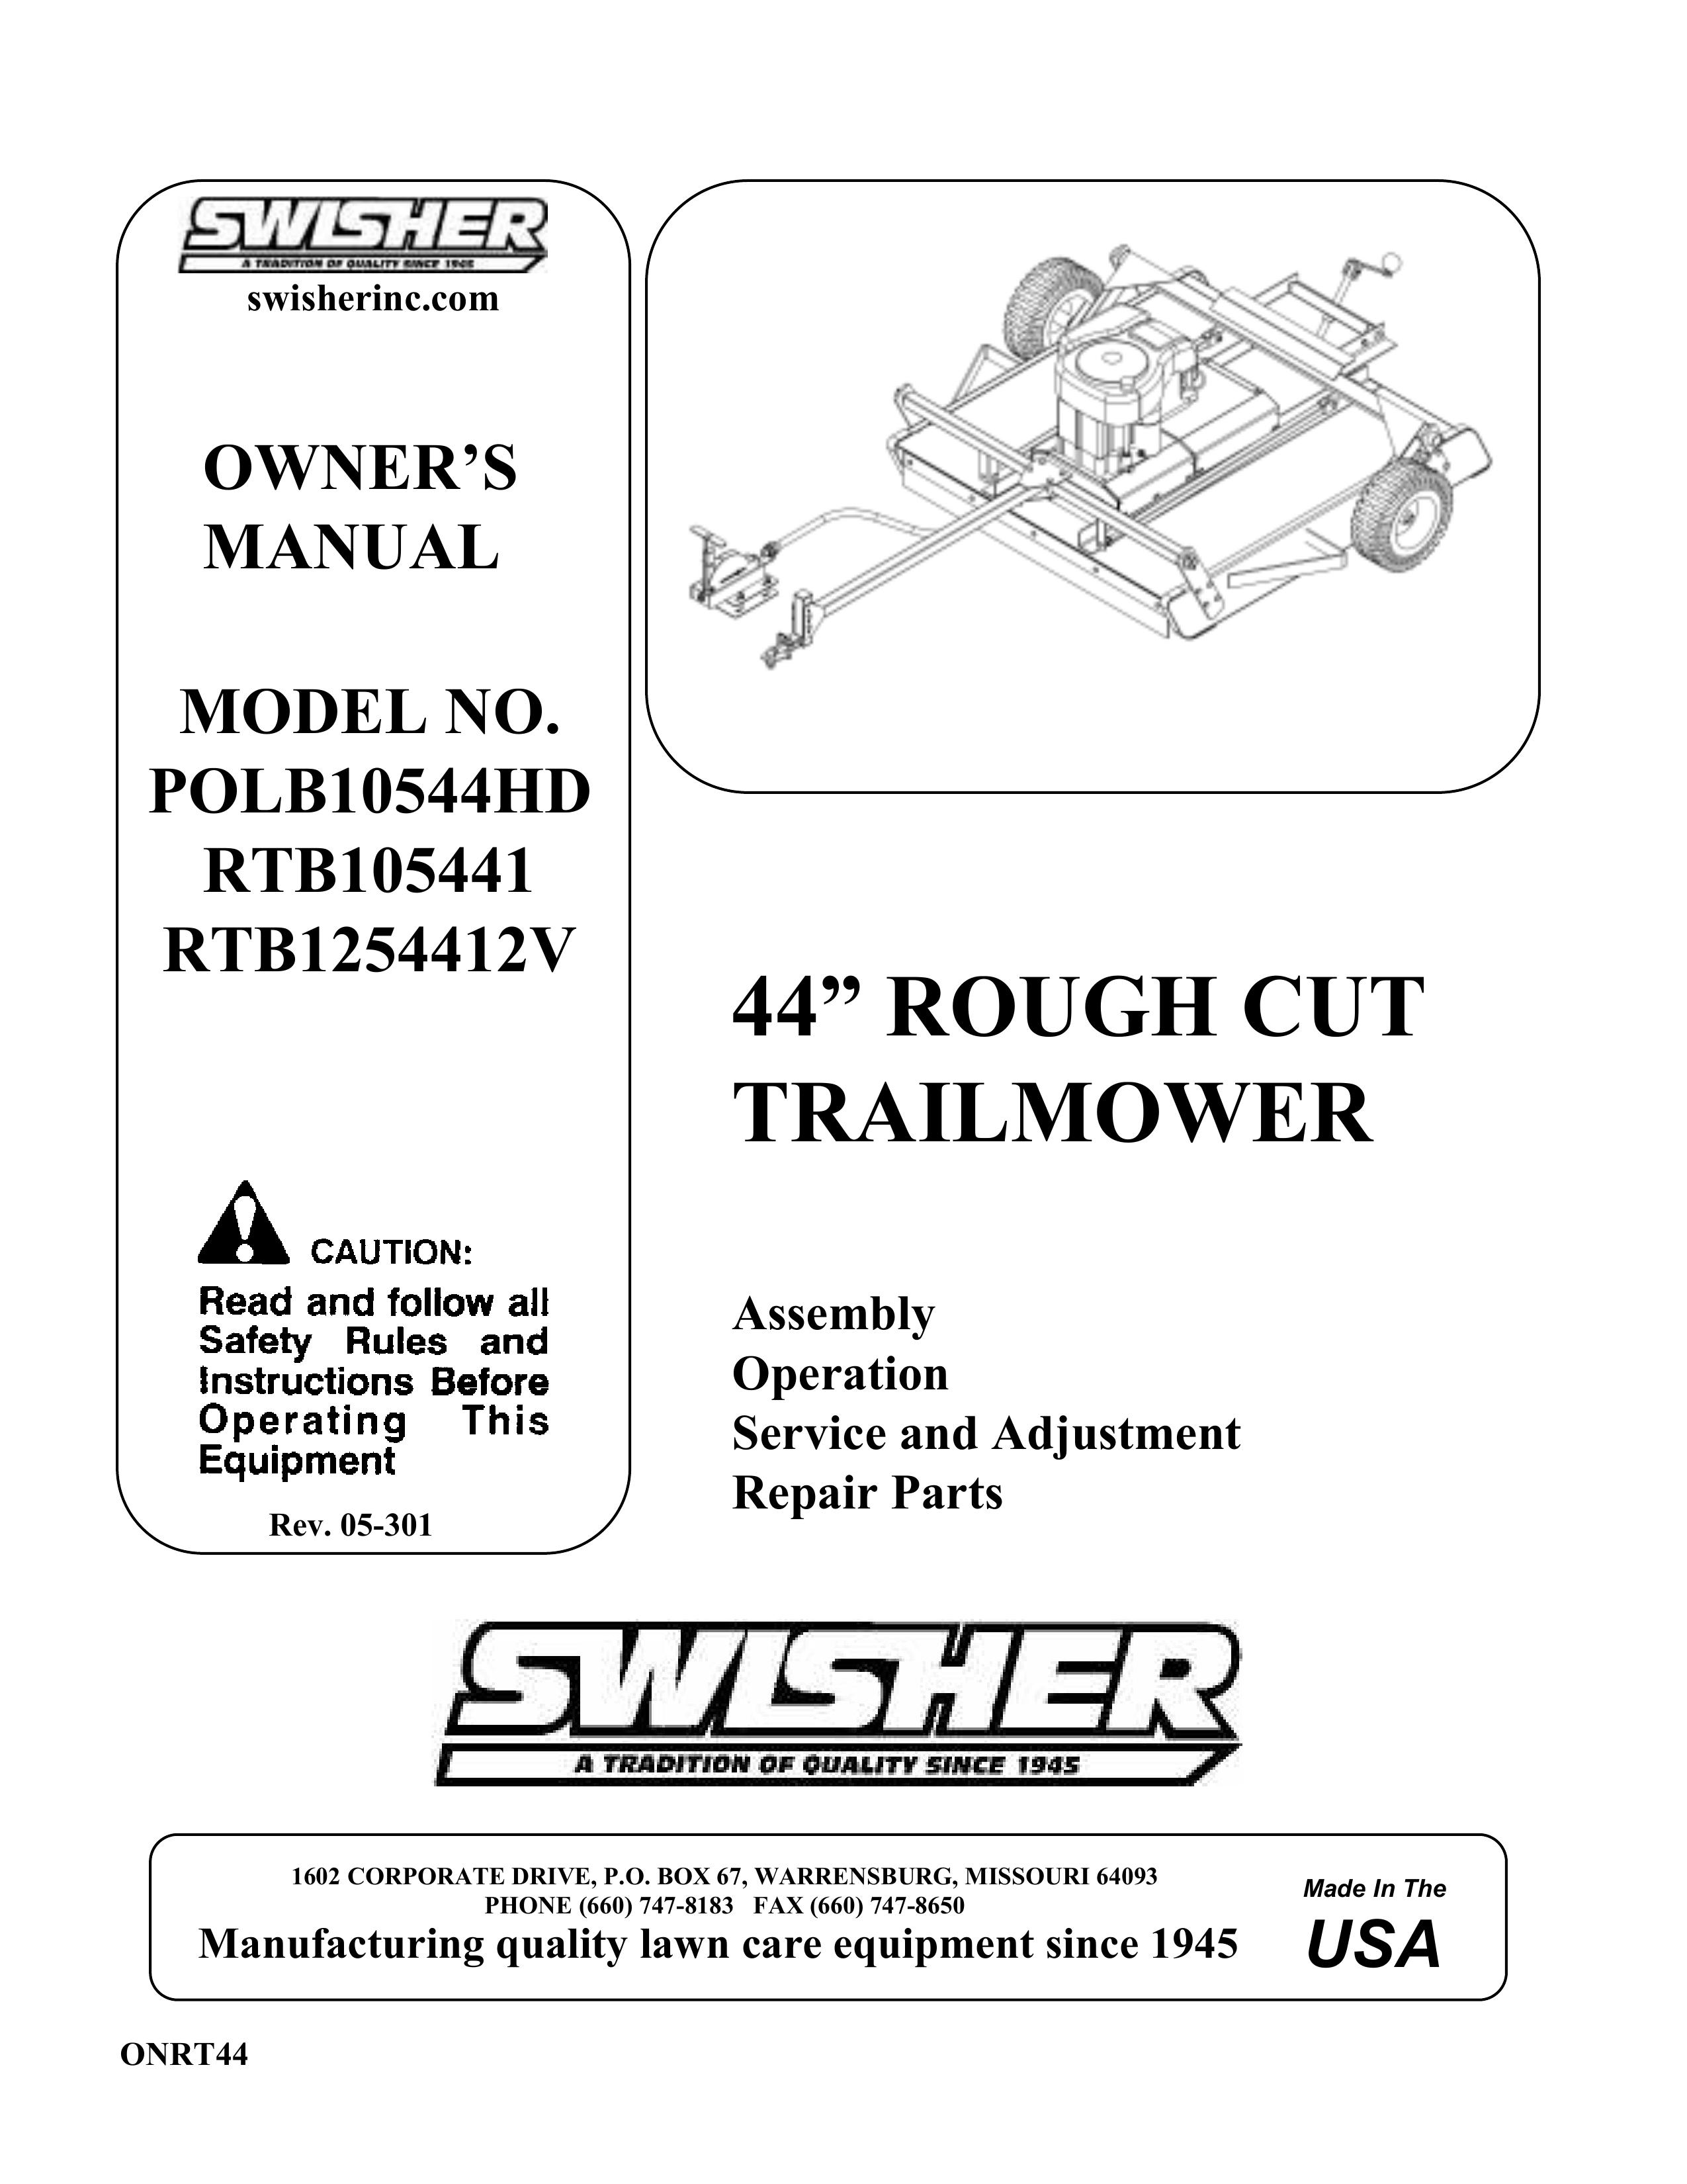 Swisher RTB1254412V, POLB10544HD, RTB105441 Lawn Mower User Manual